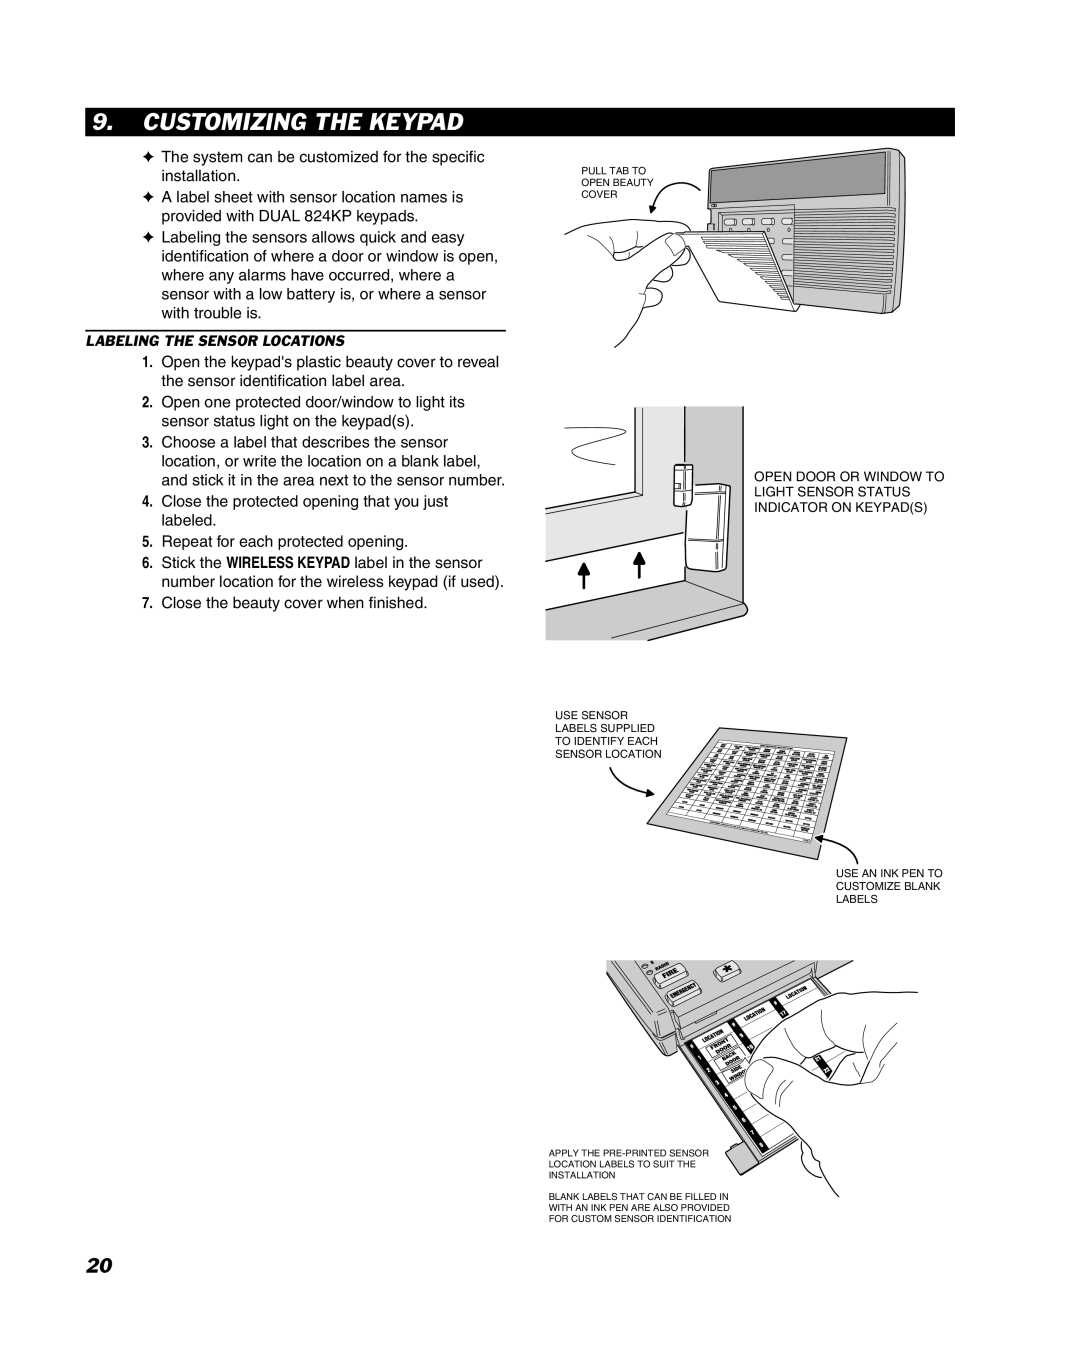 Linear DUAL 824 manual Customizing The Keypad, Labeling The Sensor Locations 